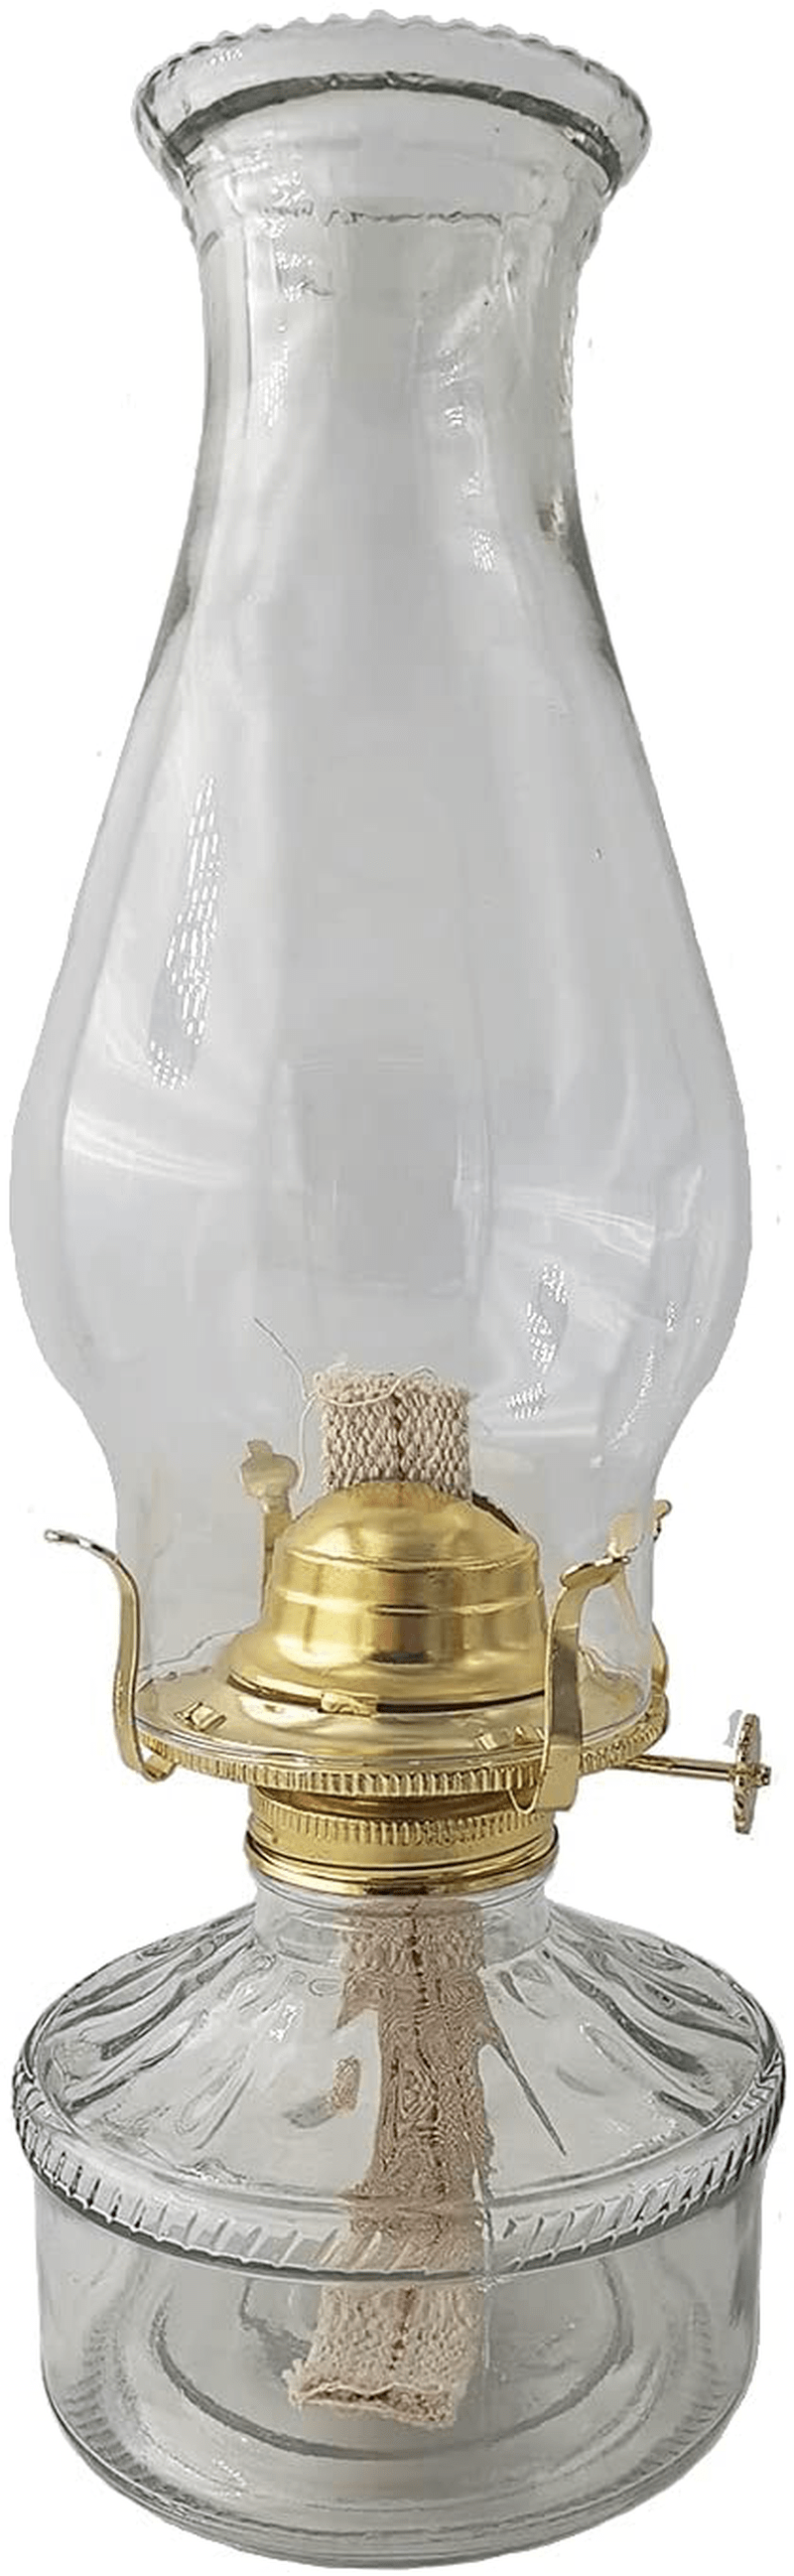 amanigo Oil-Lamp Glass Kerosene Lantern - Large Classic Oil Lamp for Indoor Use Home & Garden > Lighting Accessories > Oil Lamp Fuel amanigo Default Title  